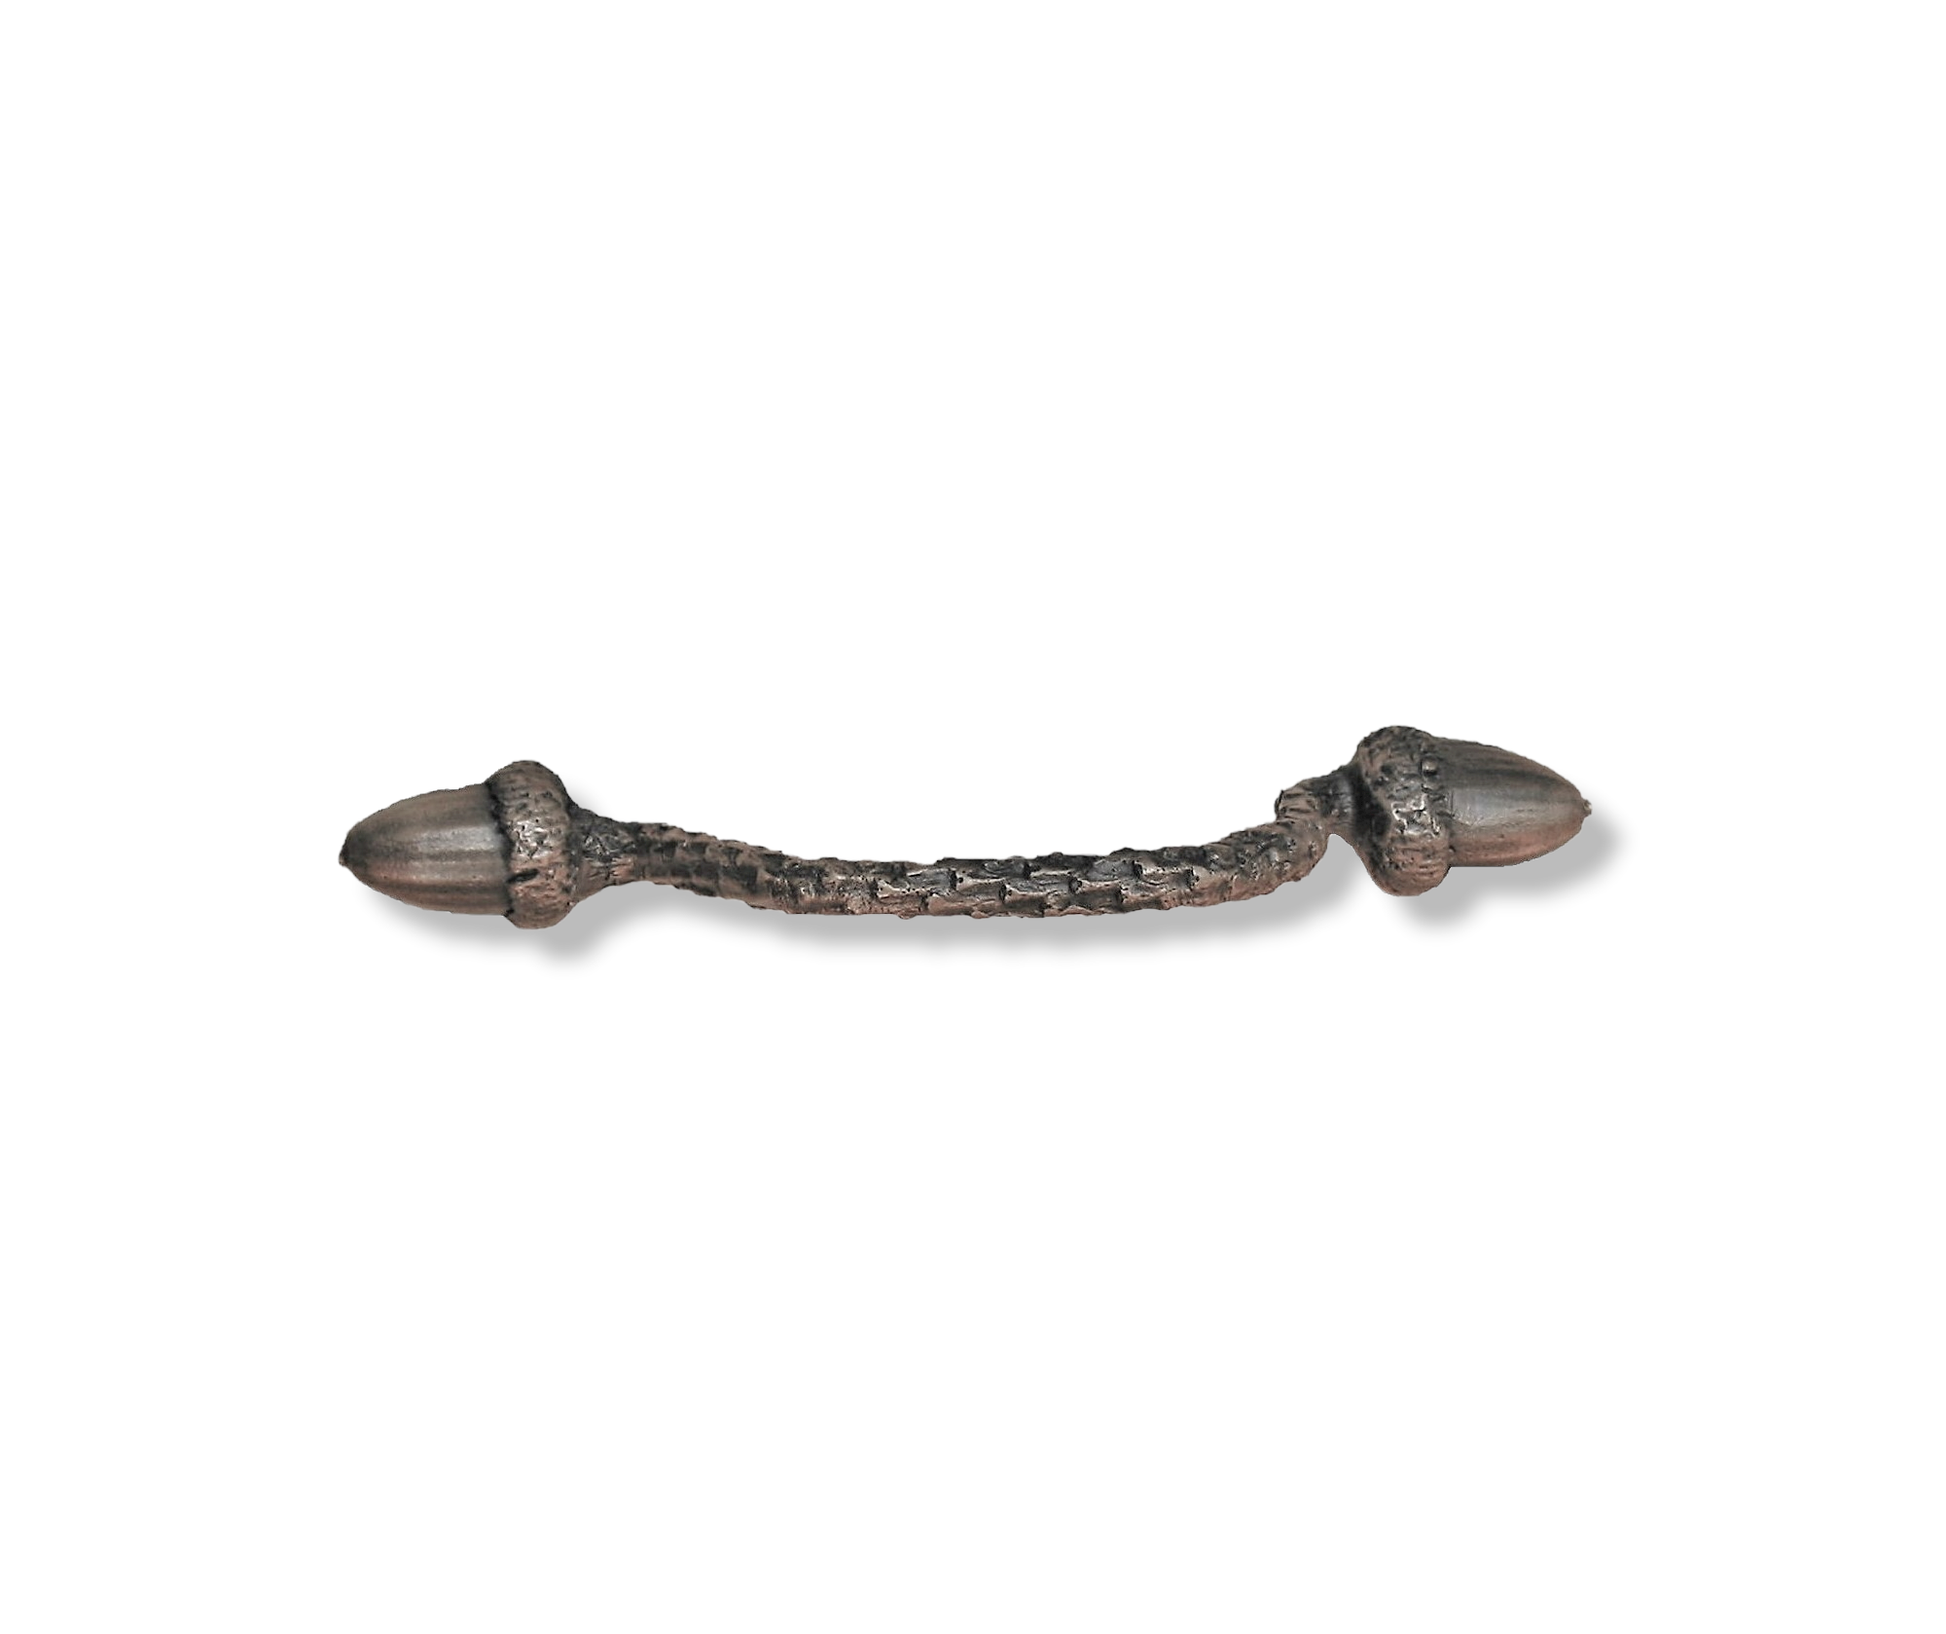 4" Bronze branch handle with two acorns. Basic patina has gold undertones